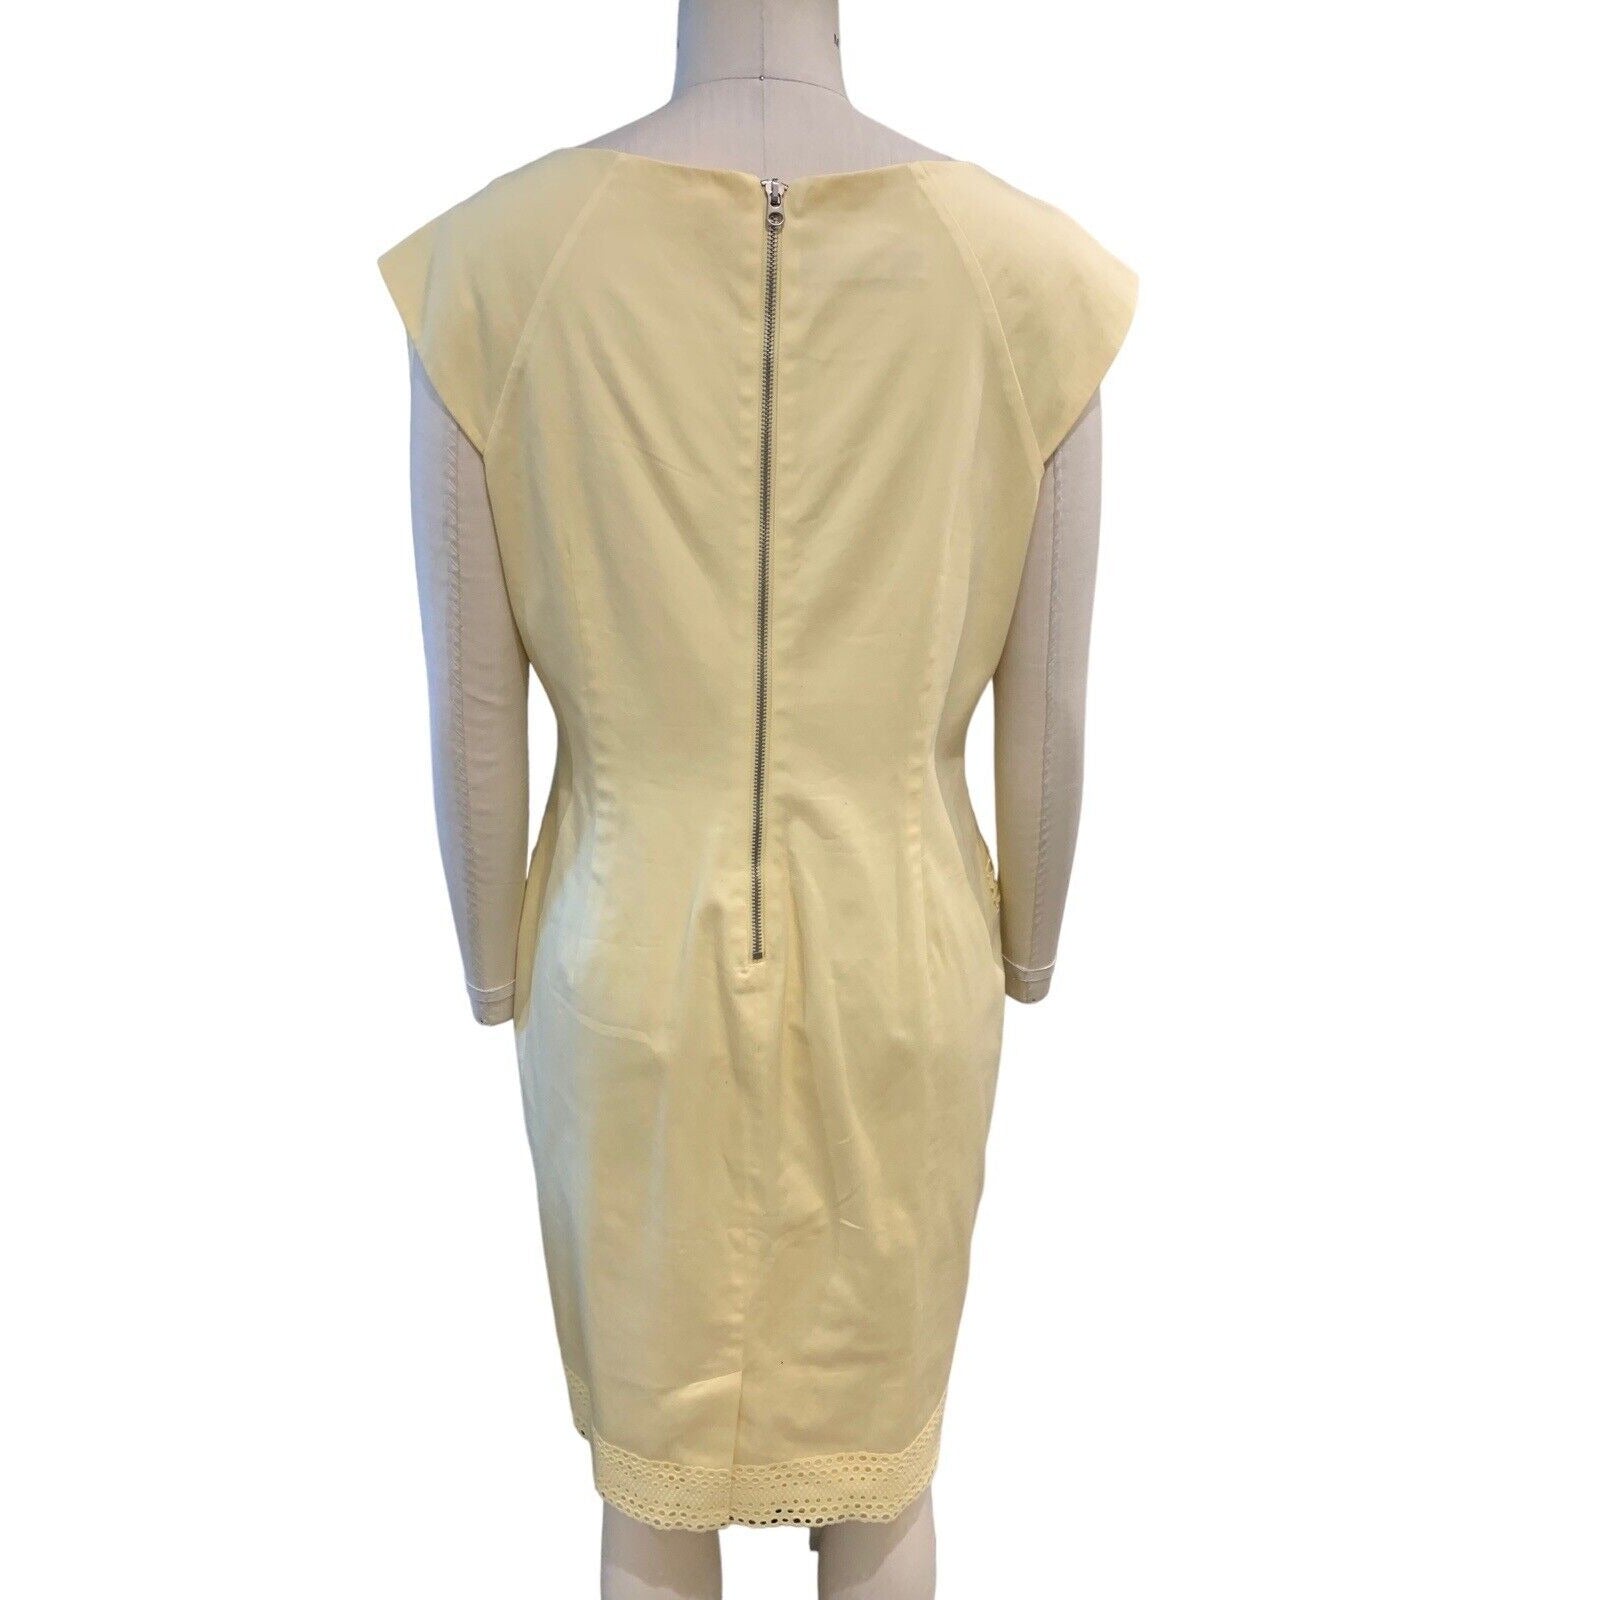 Rear View Of Women's Yellow Dress